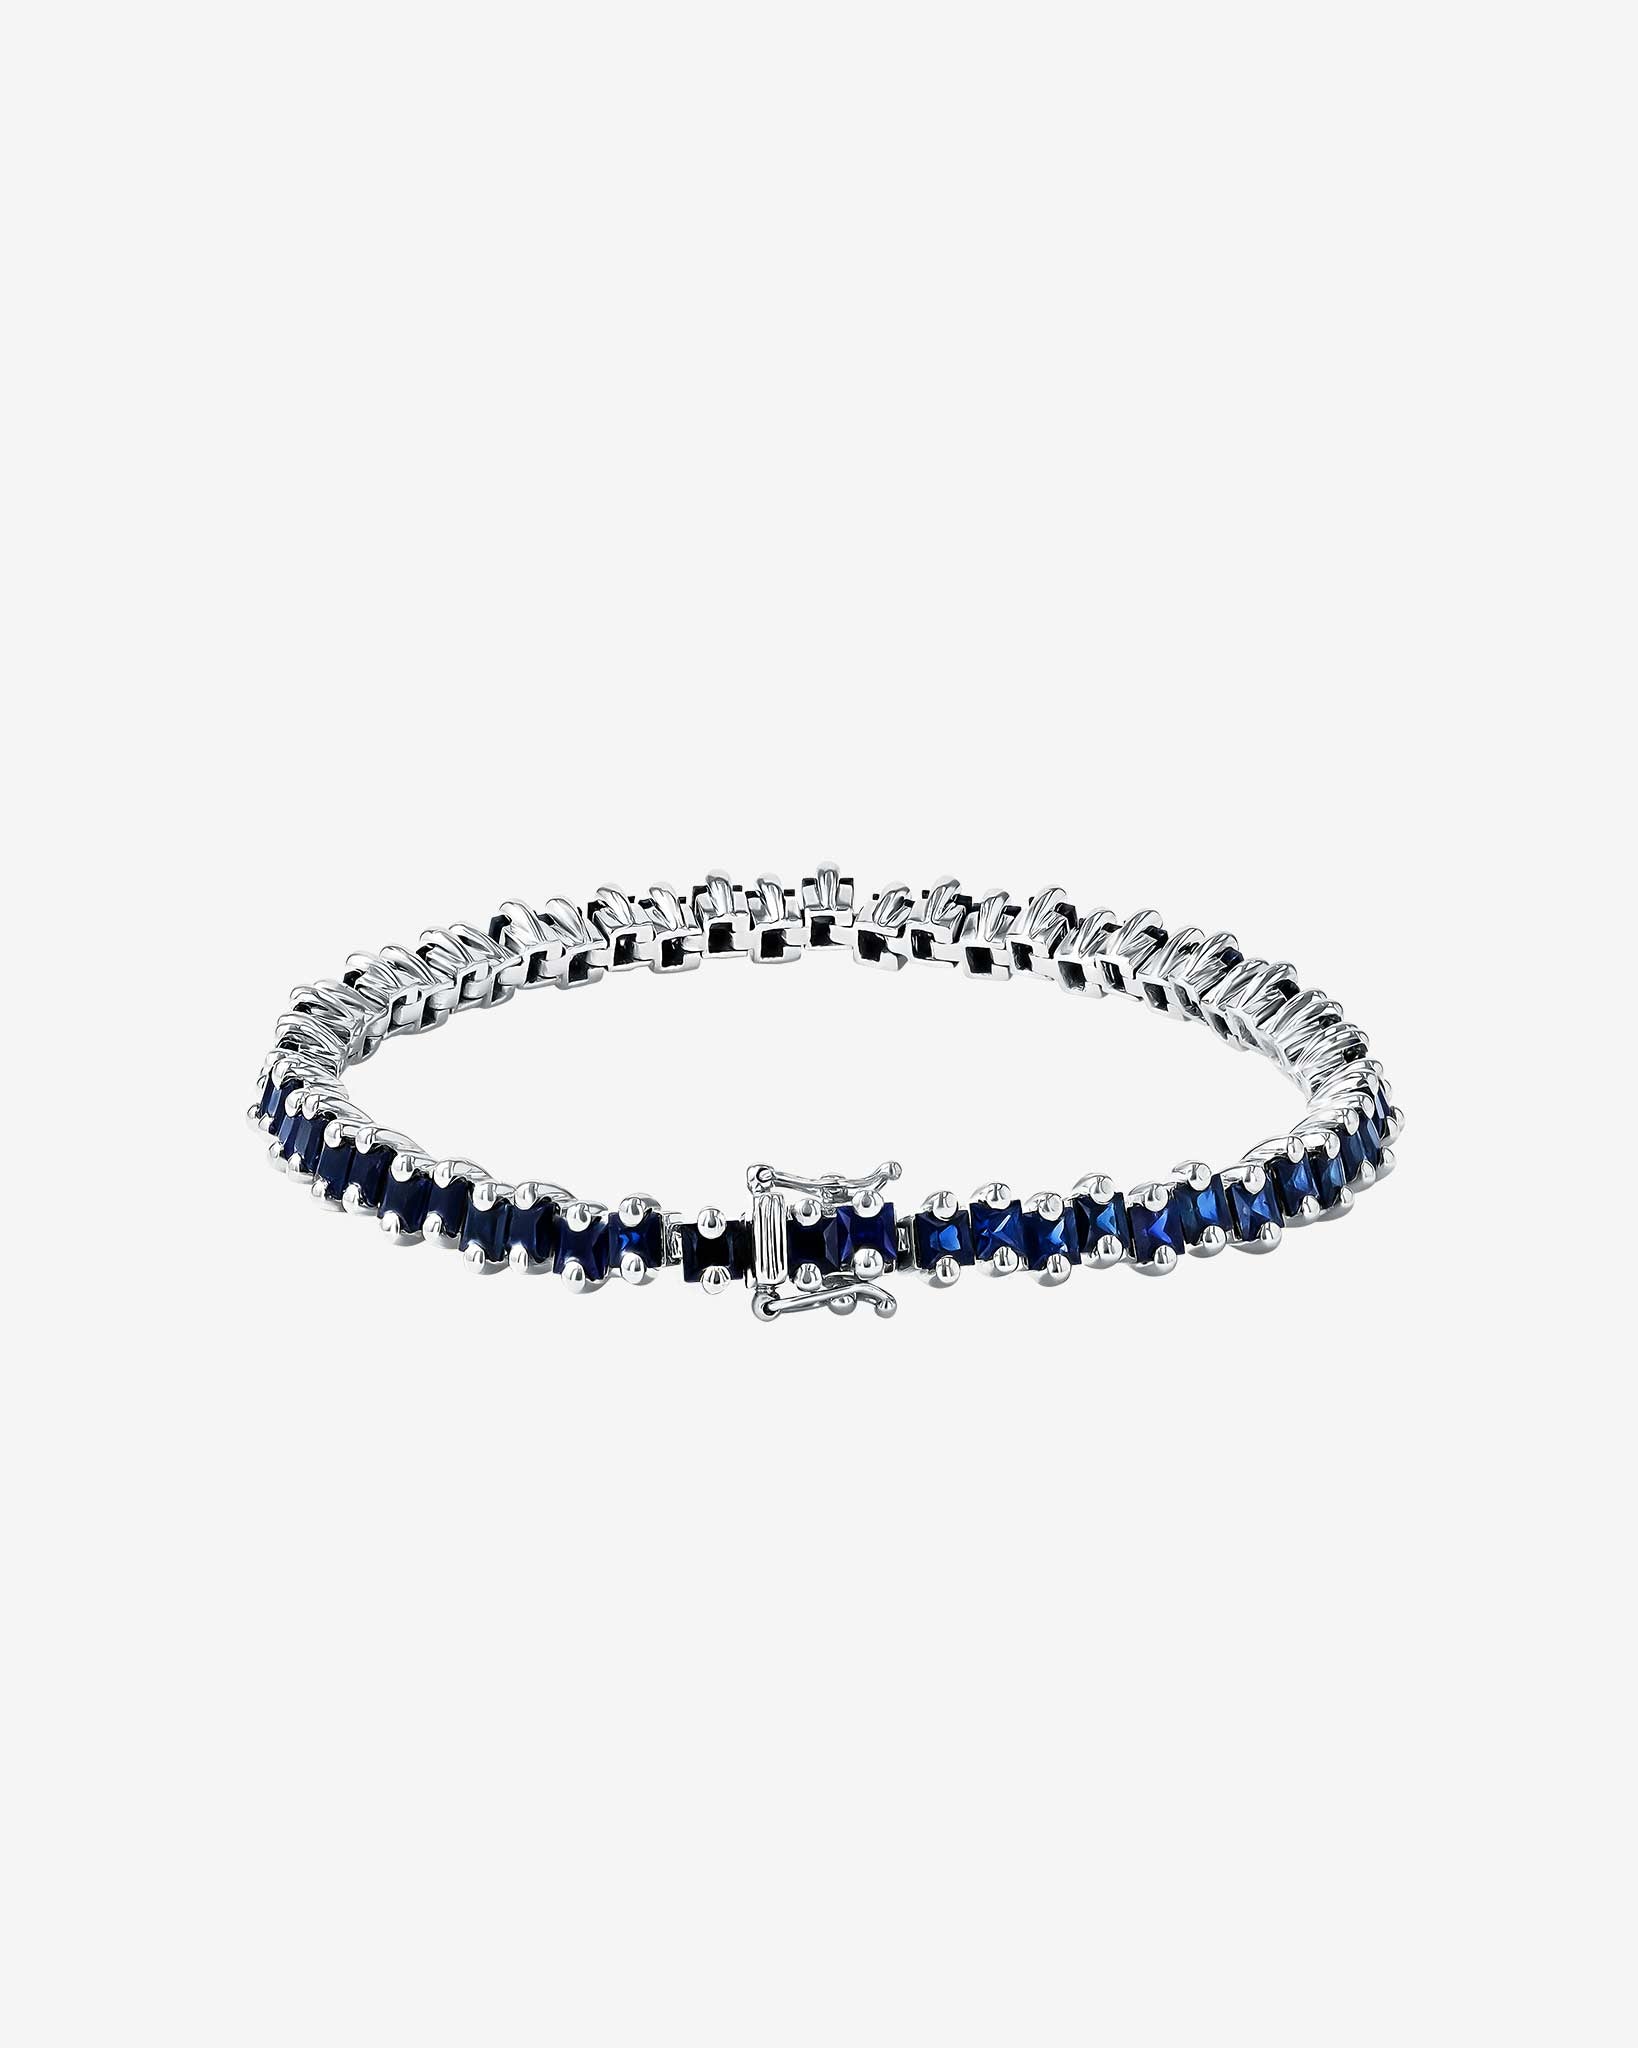 Suzanne Kalan Princess Milli Dark Blue Sapphire Tennis Bracelet in 18k white gold